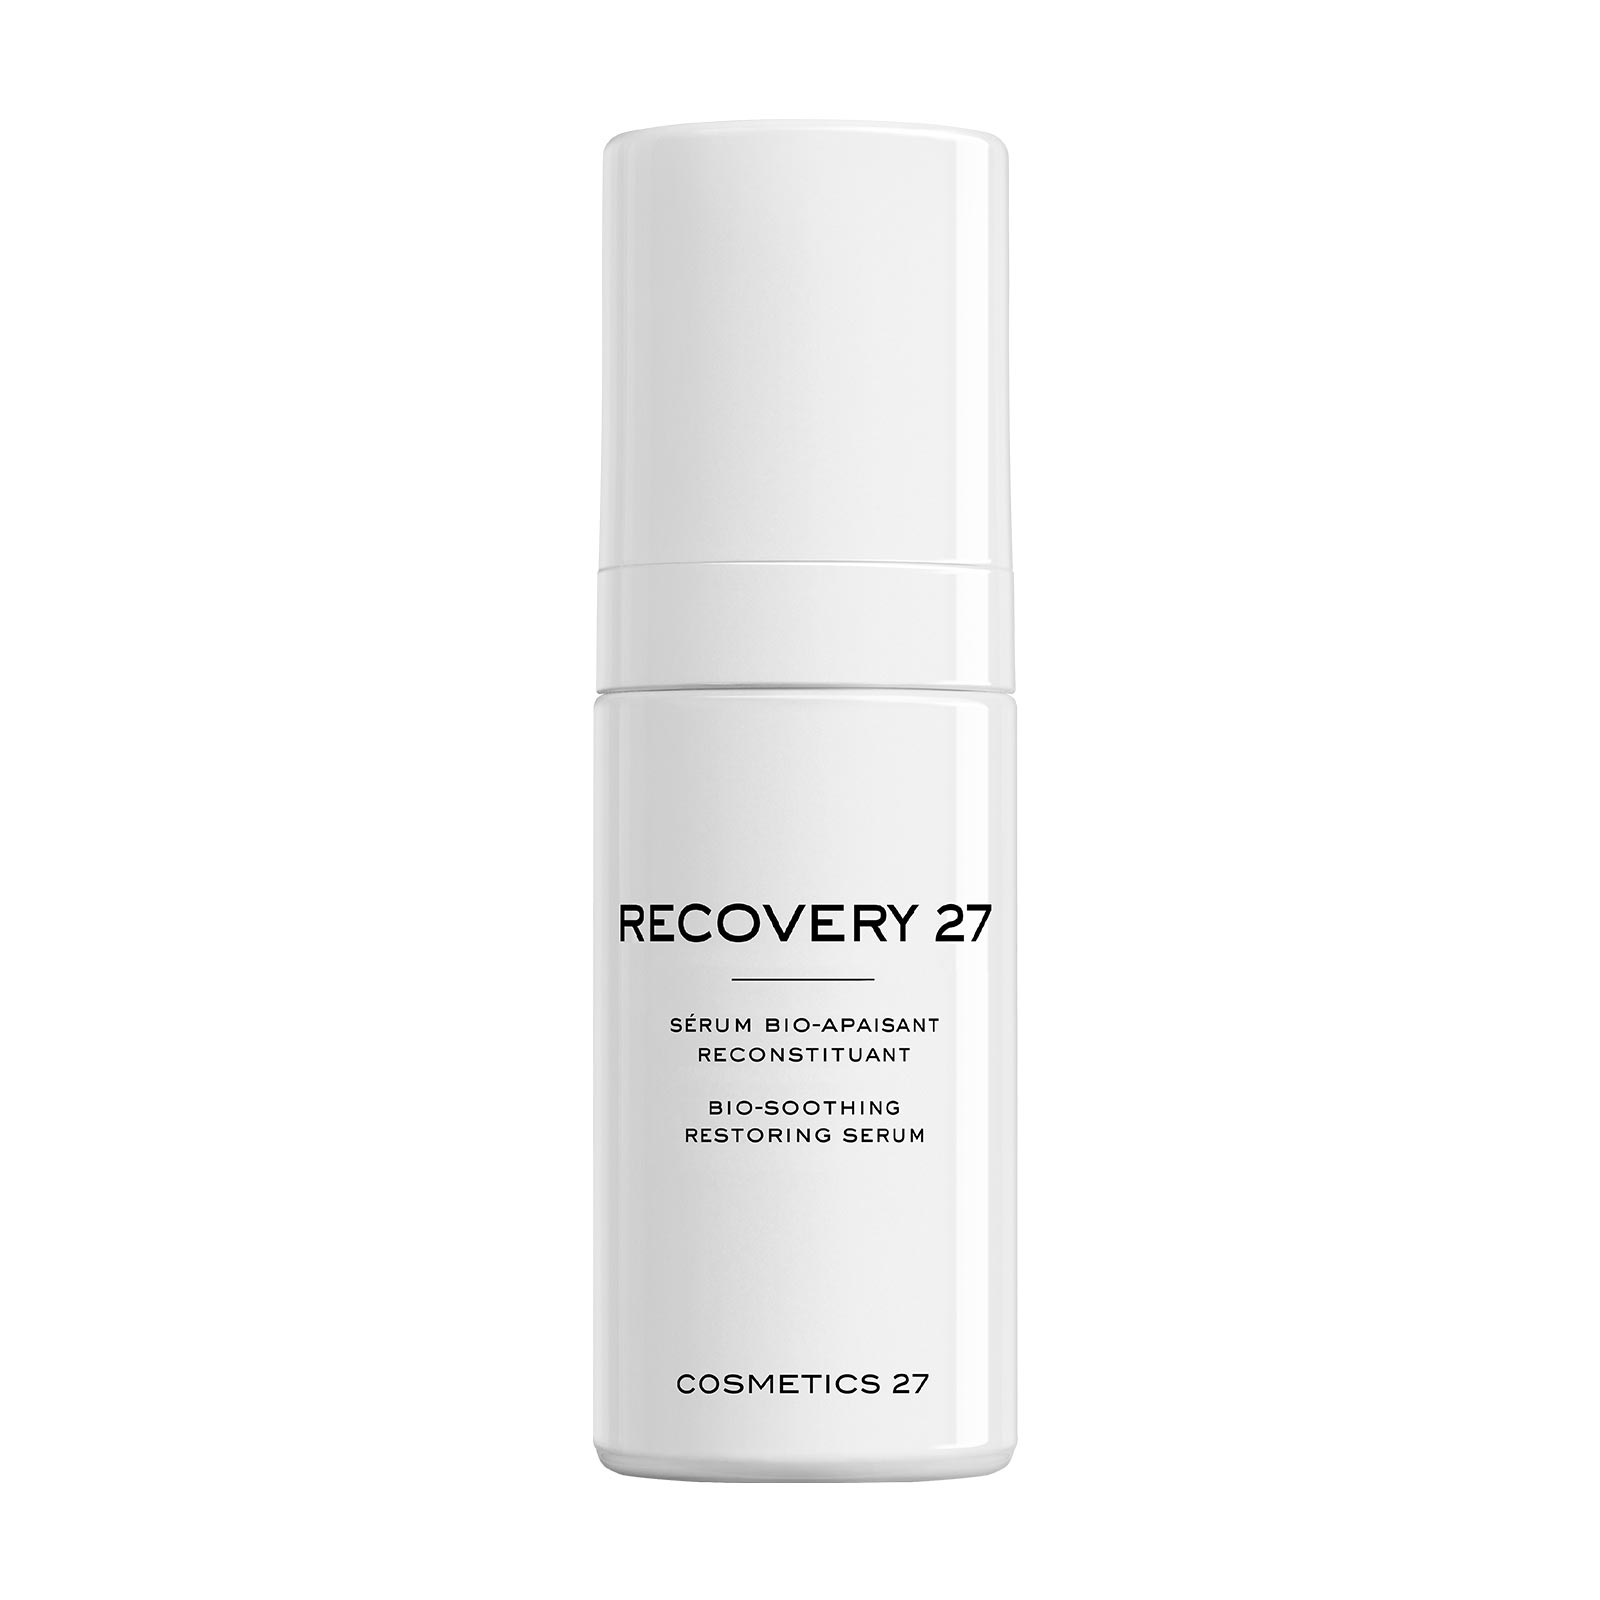 Cosmetics 27 Recovery 27